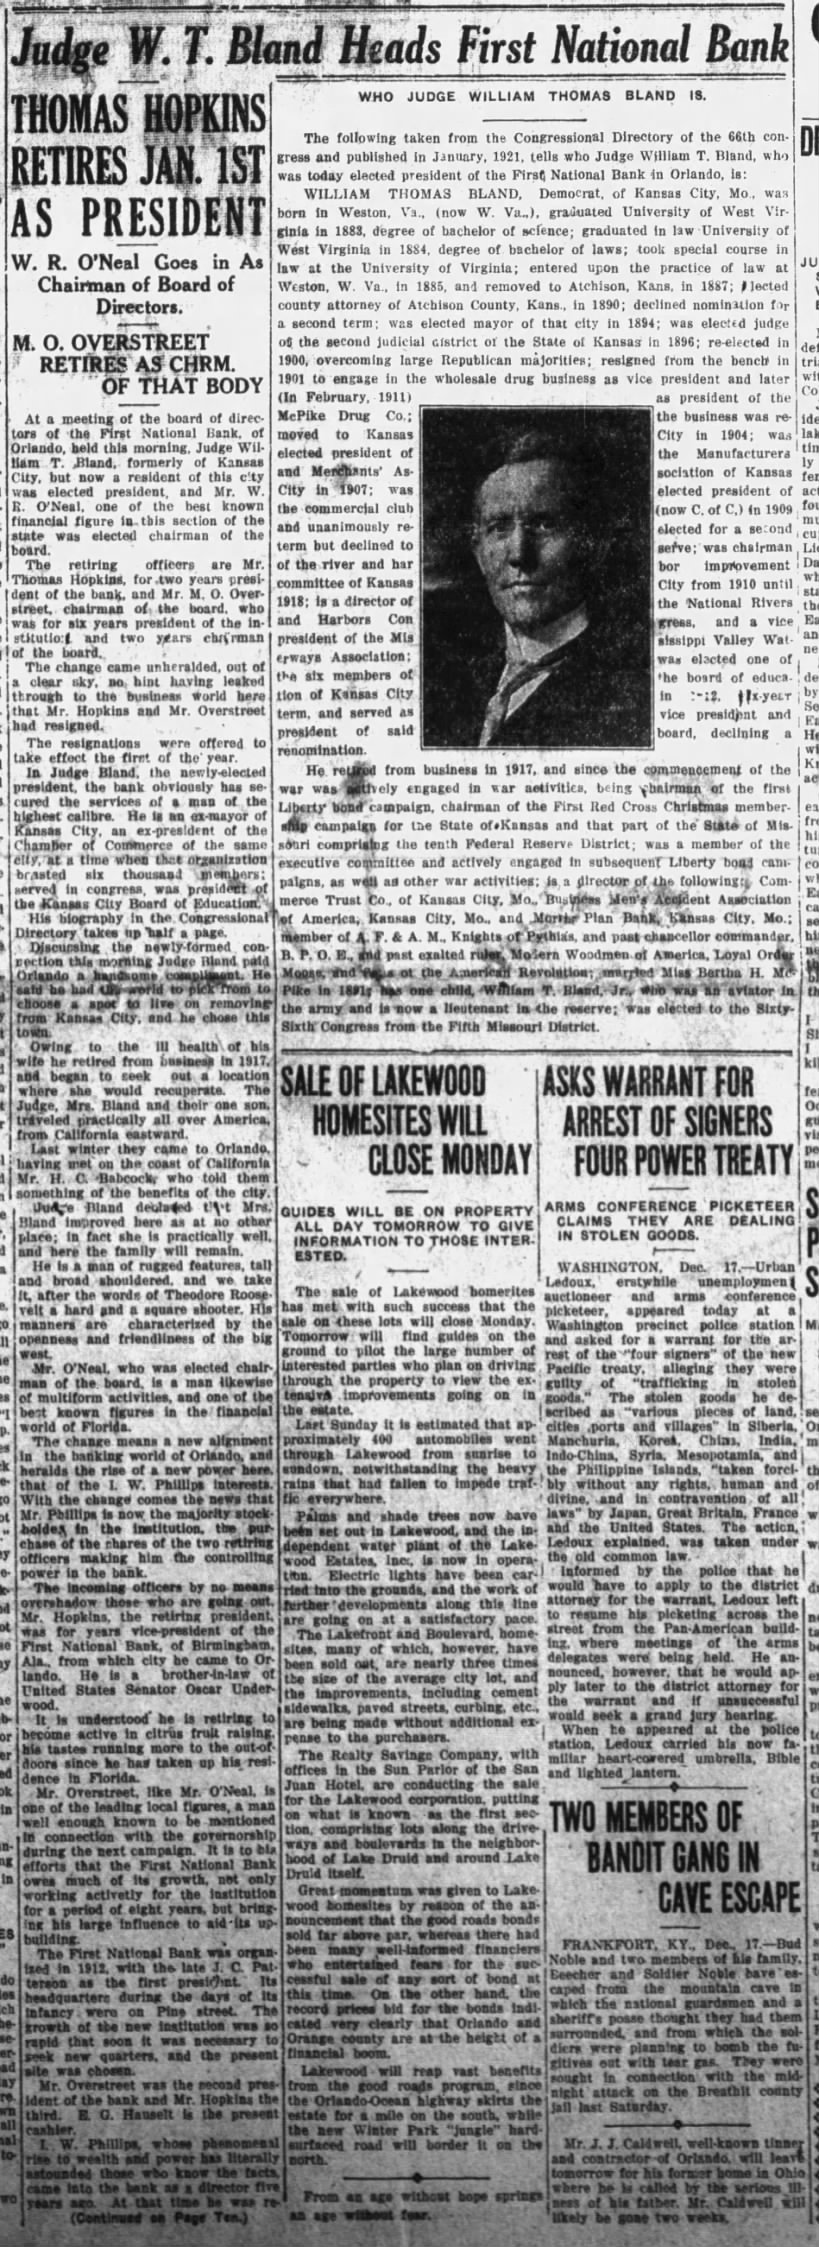 Judge W. T. Bland Heads First National Bank; 17 Dec 1921; Orlando Evening Star; 1